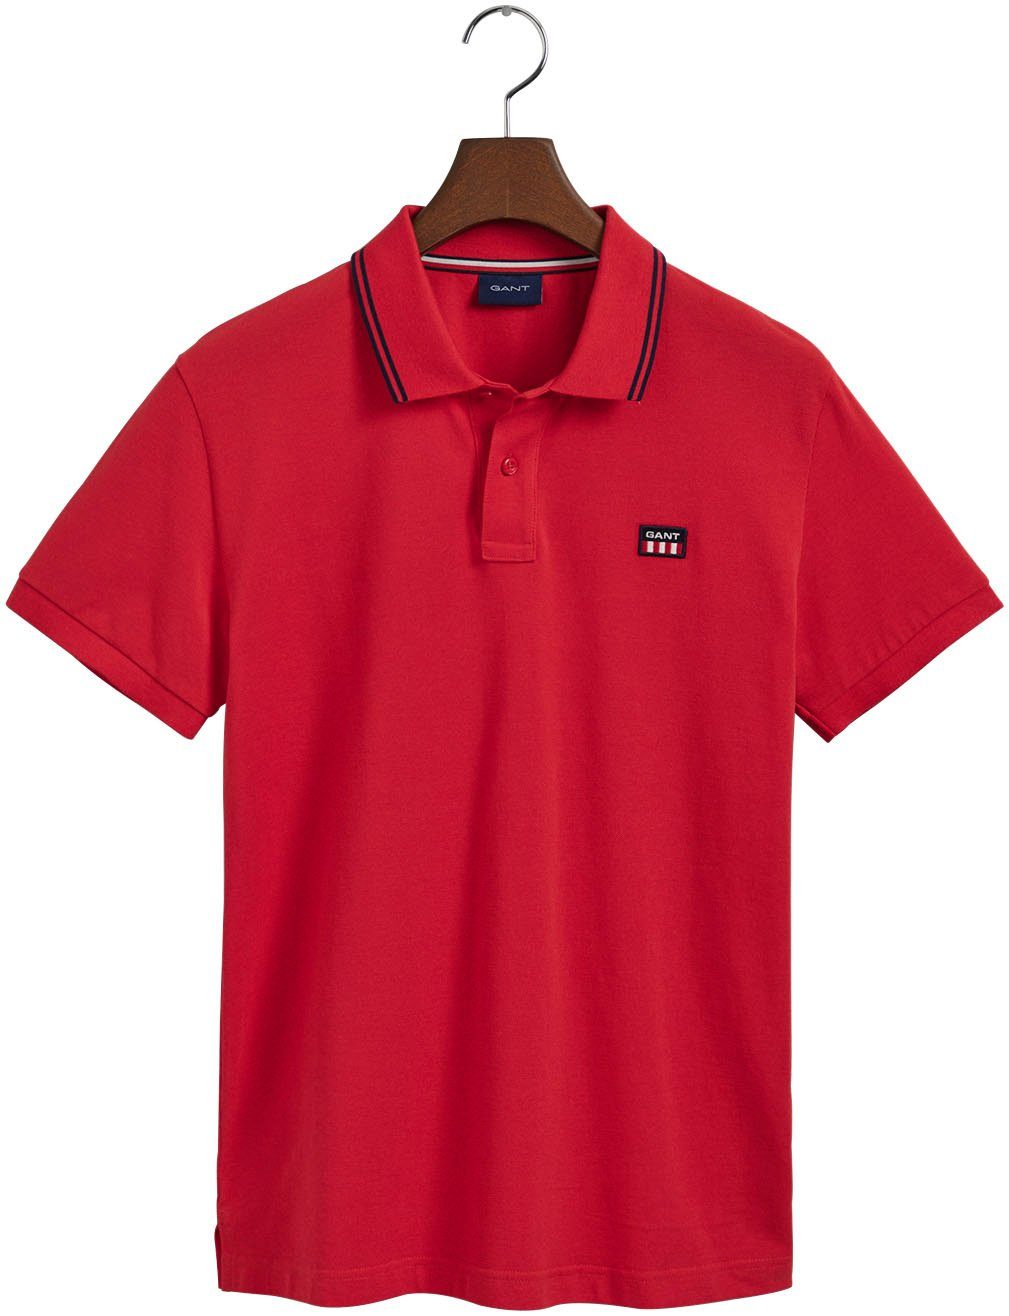 Preislimitierter Sonderverkauf Gant Poloshirt Piqué Kontrastkragen rot mit Poloshirt